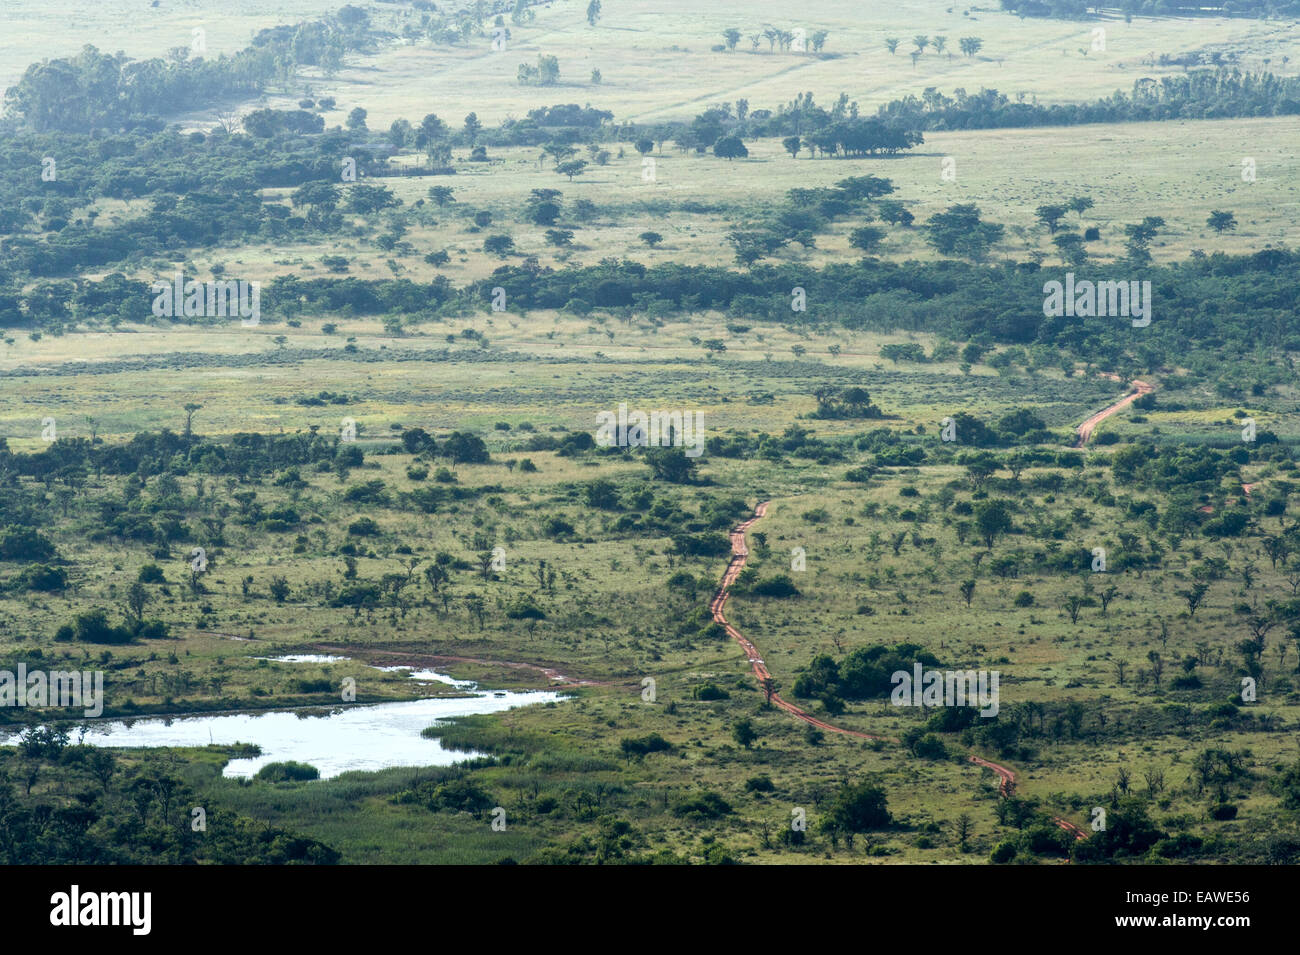 A vehicle track crosses a vast savannah plain past a waterhole. Stock Photo